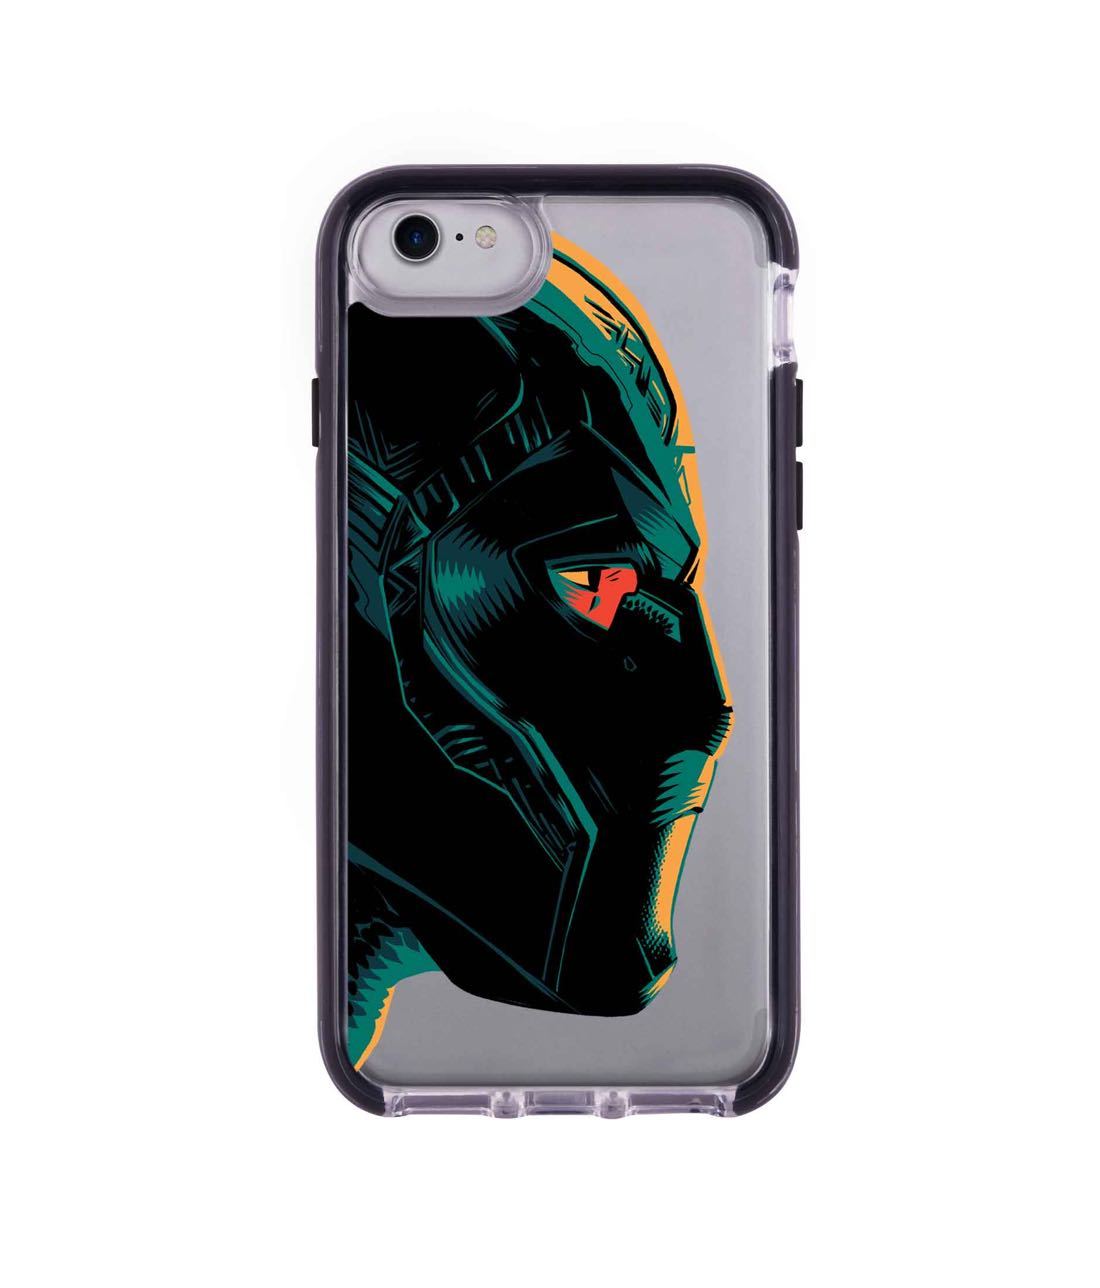 Illuminated Black Panther - Extreme Phone Case for iPhone 7